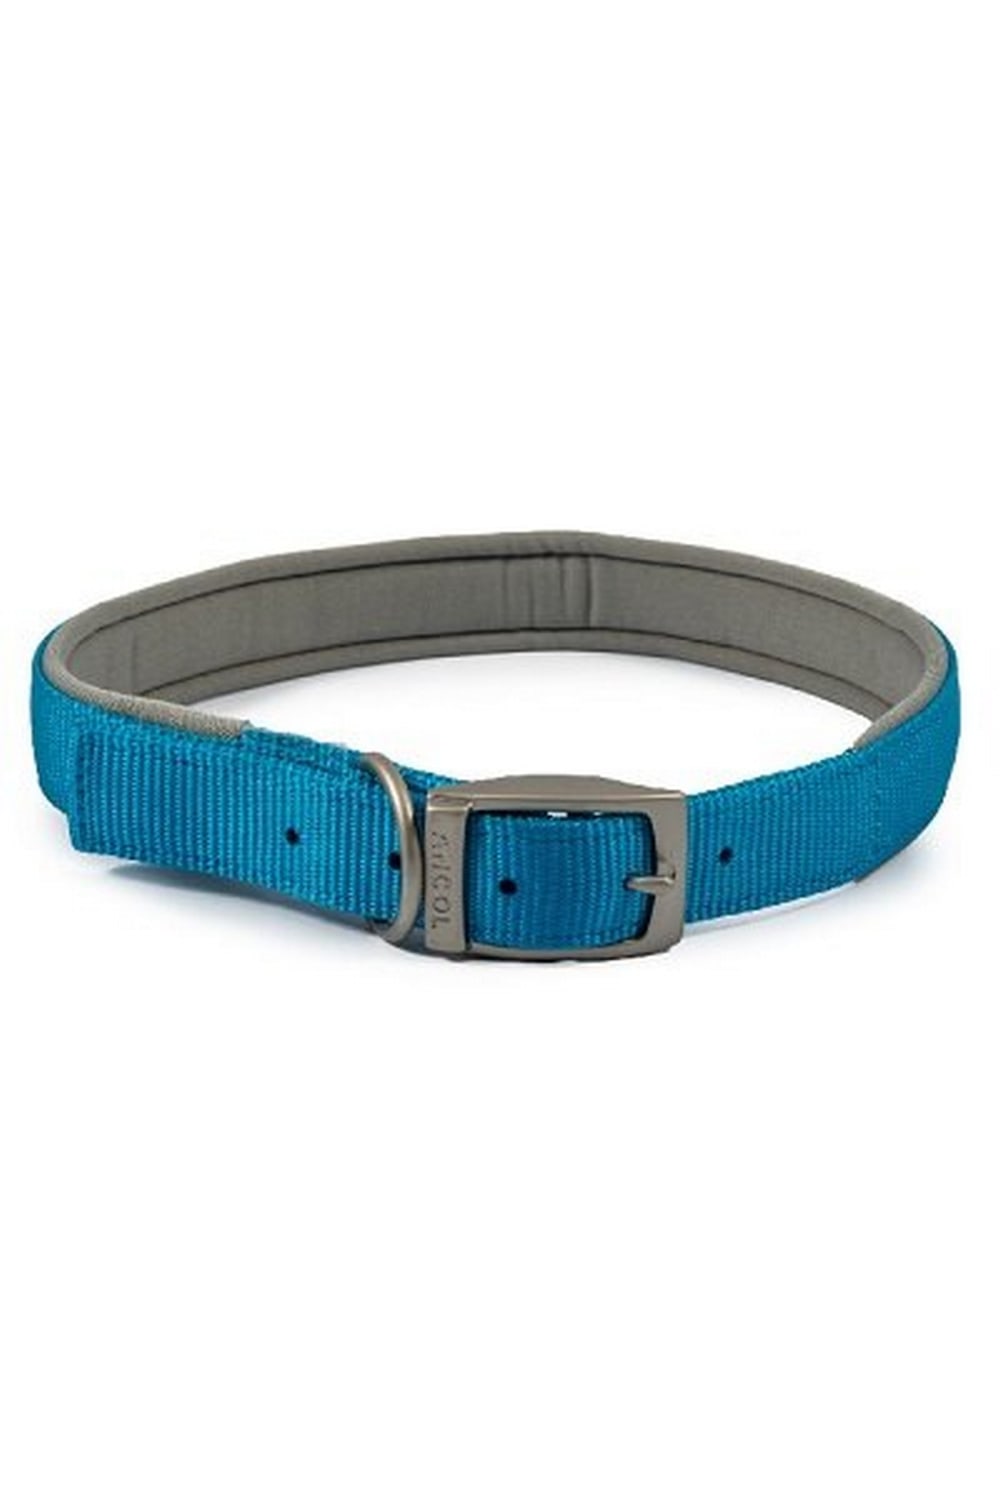 Ancol Padded Nylon Collar (Blue) (19.69in - 23.23in)